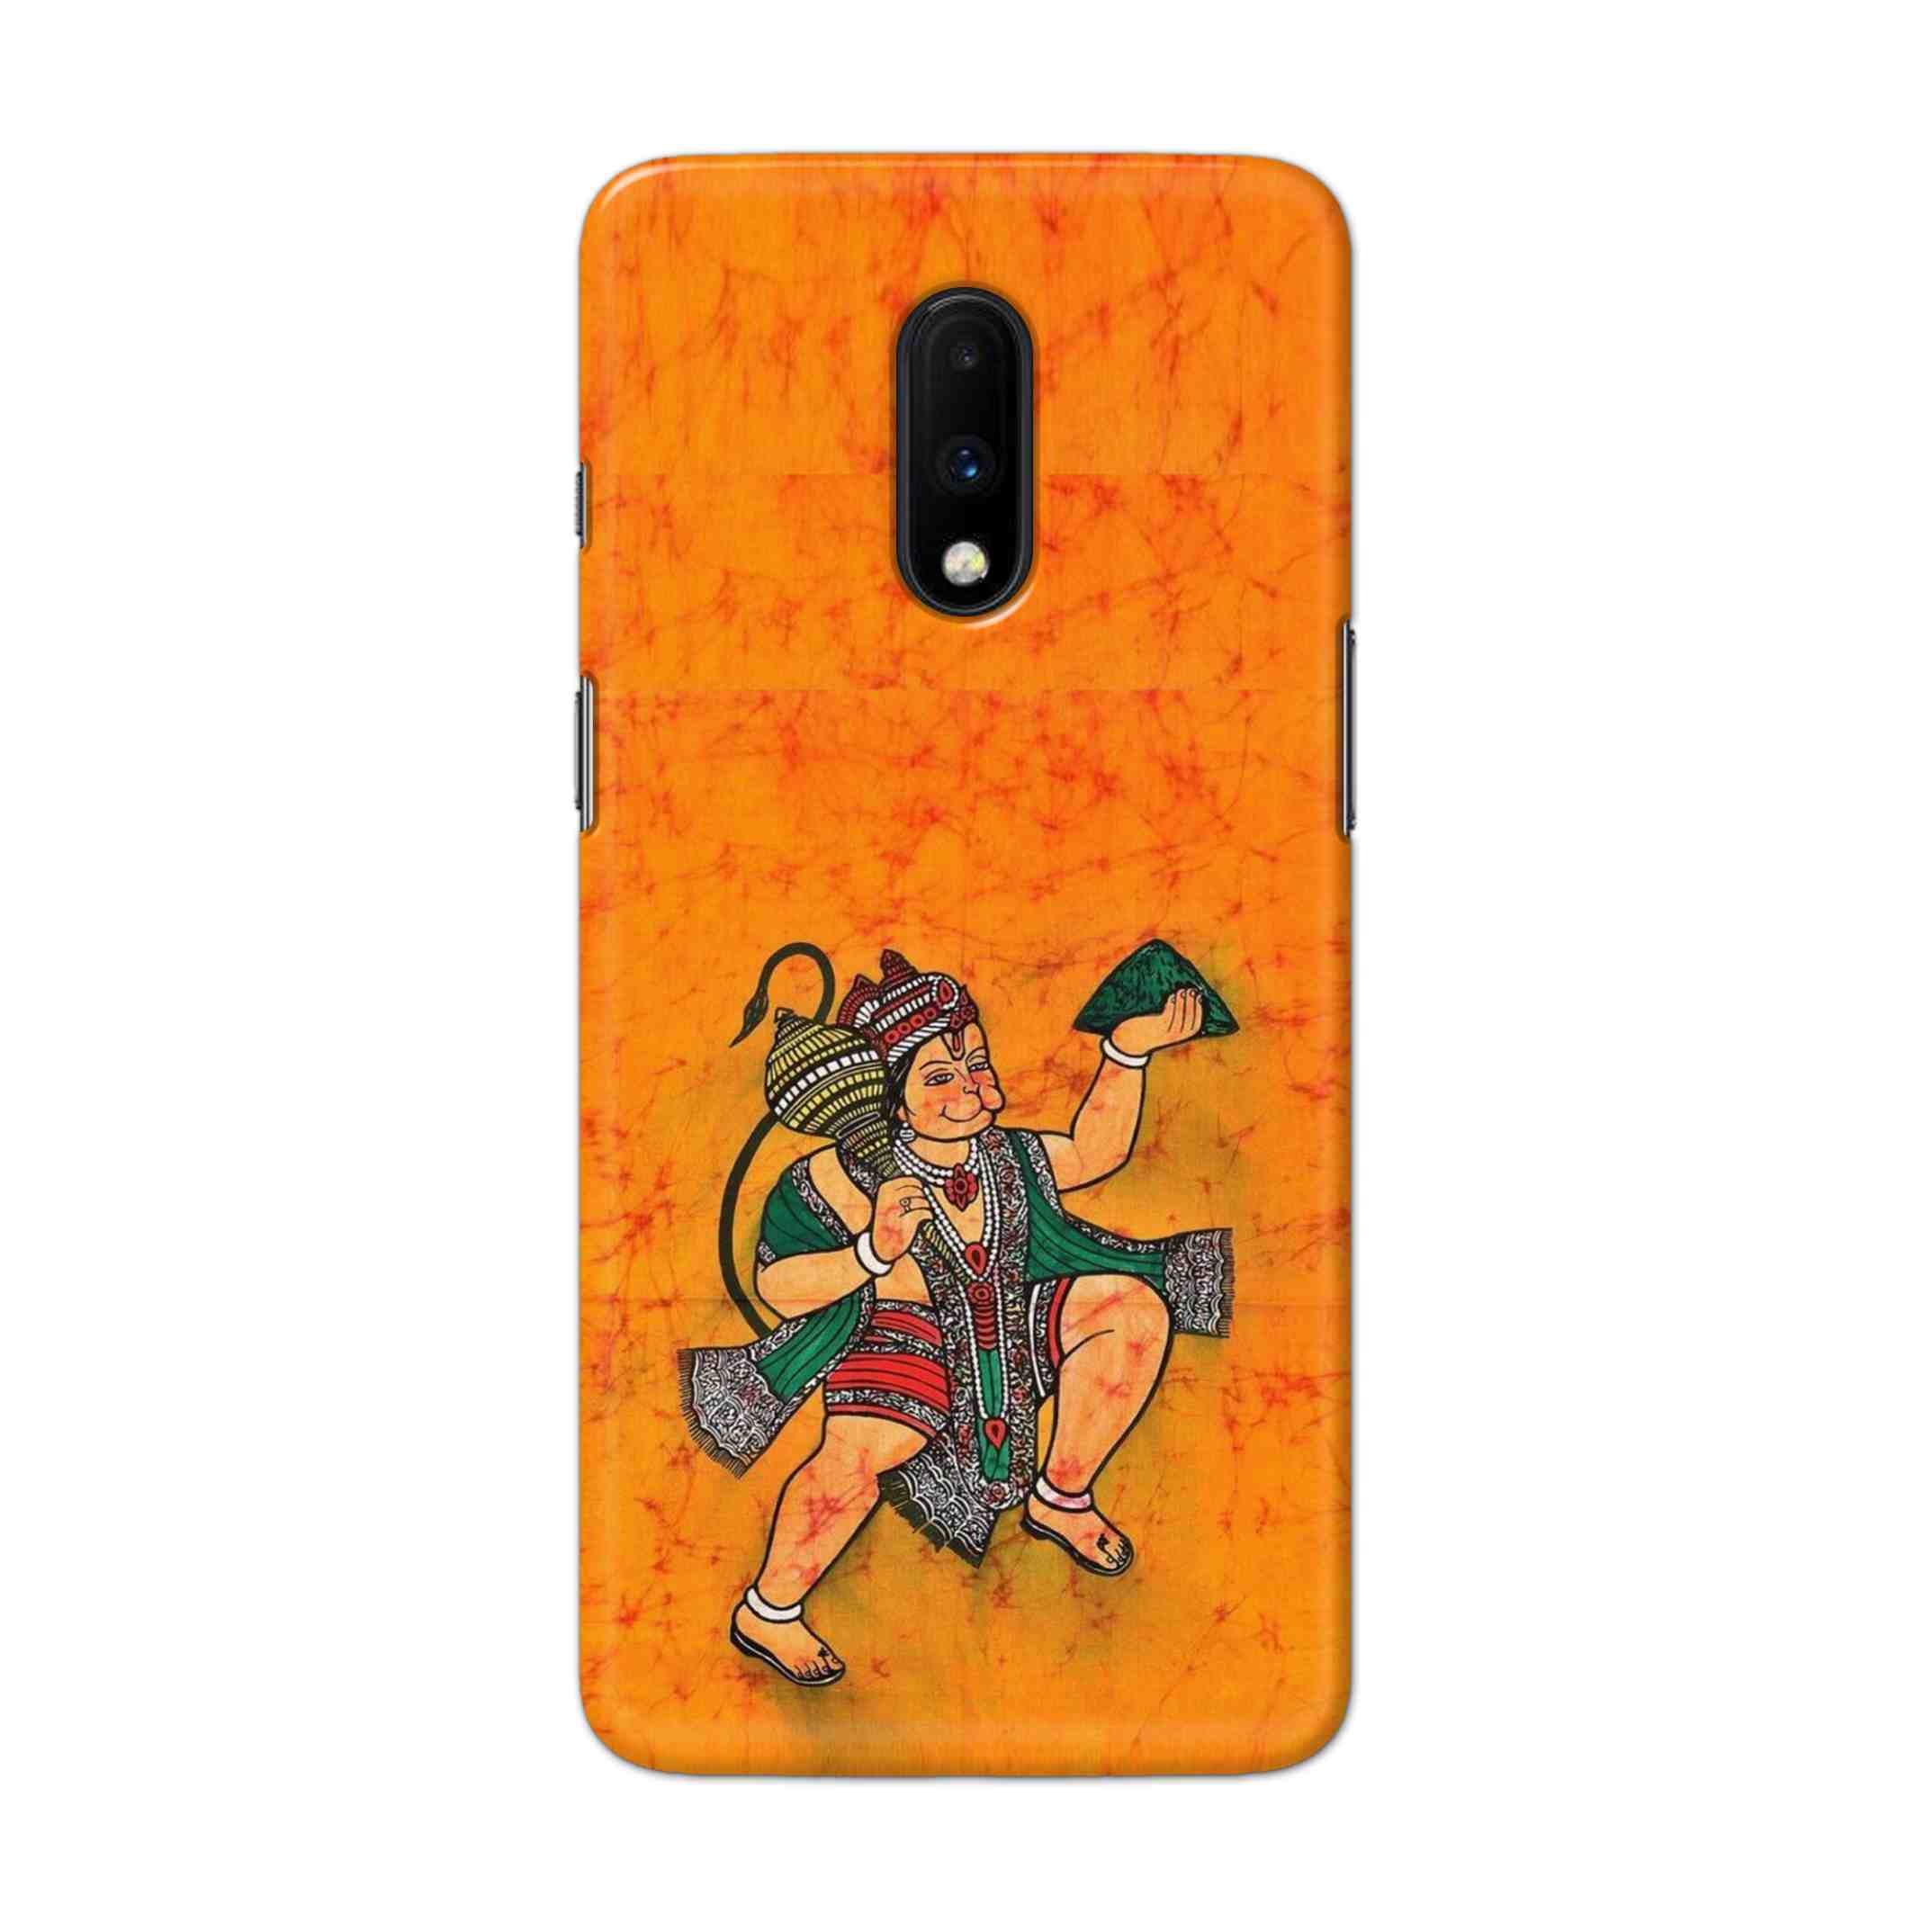 Buy Hanuman Ji Hard Back Mobile Phone Case Cover For OnePlus 7 Online